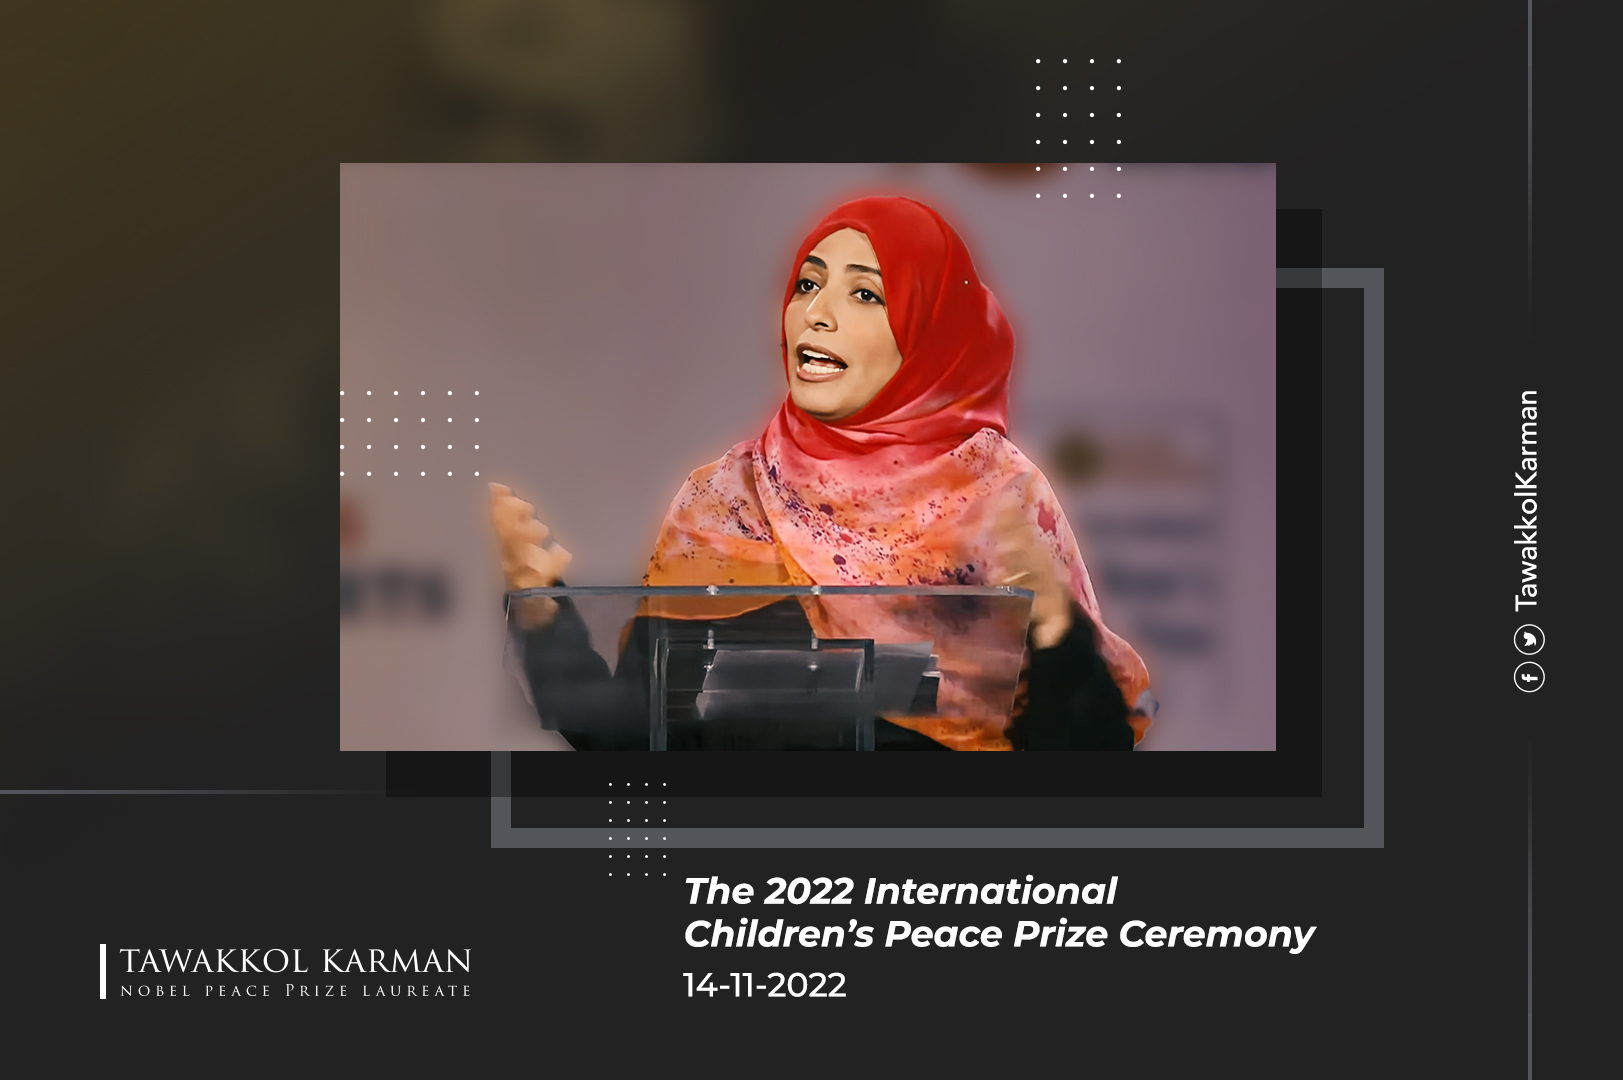 The 2022 International Children’s Peace Prize Ceremony